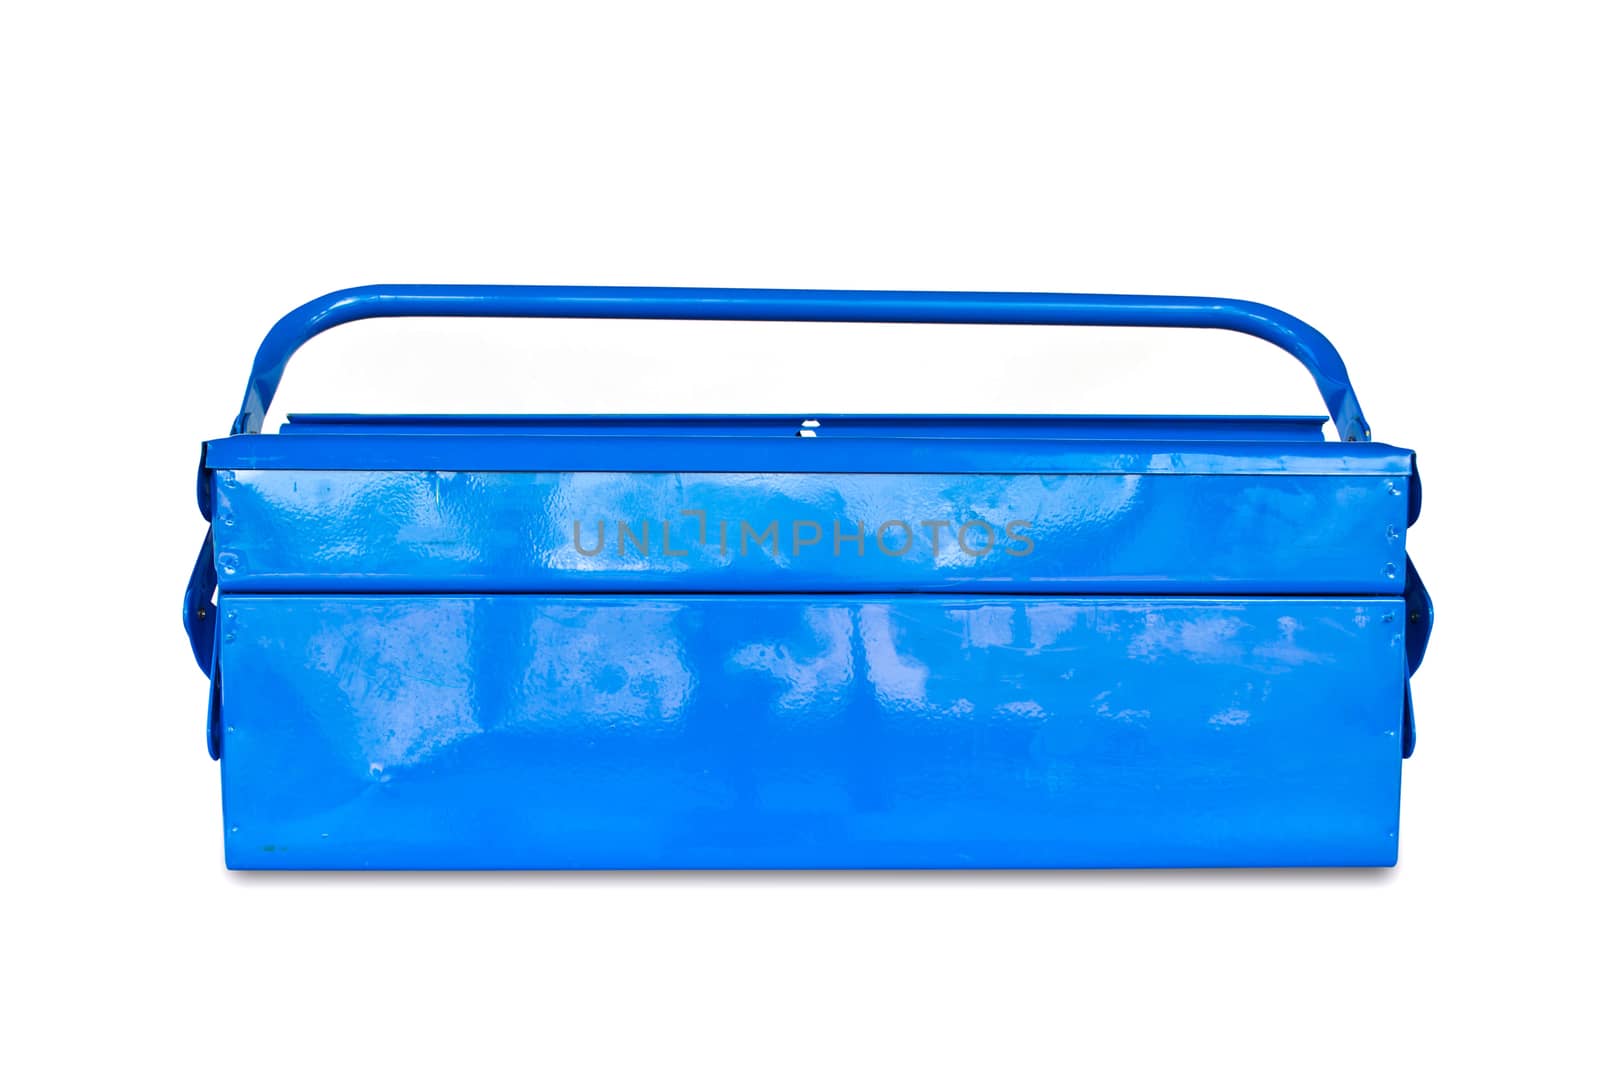 Blue tool box isolated on white background